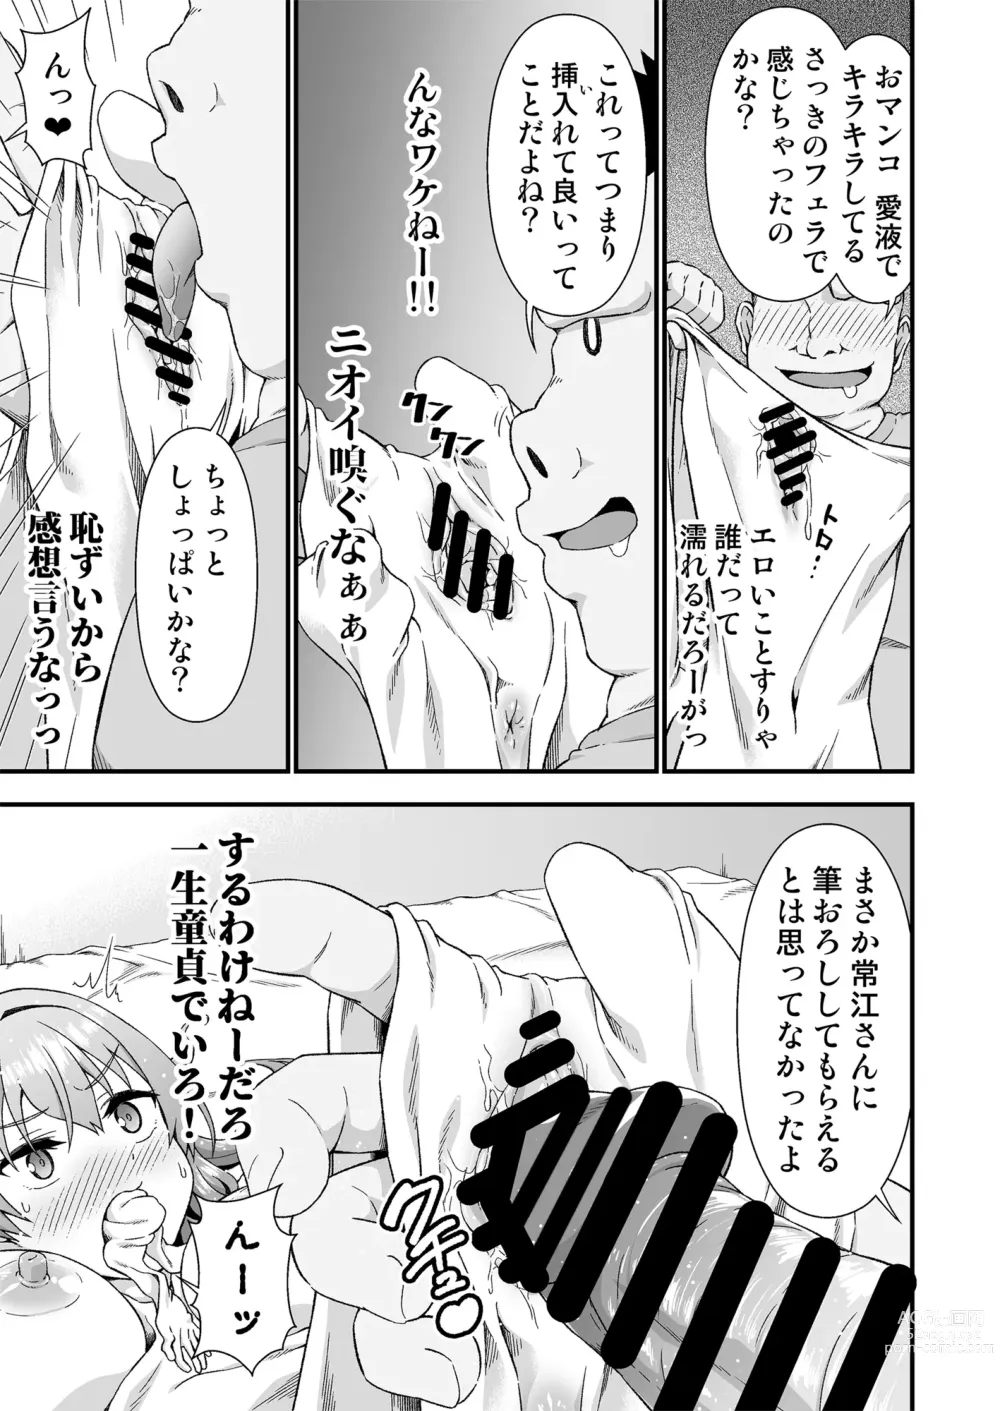 Page 16 of doujinshi Kawa-ka daiko